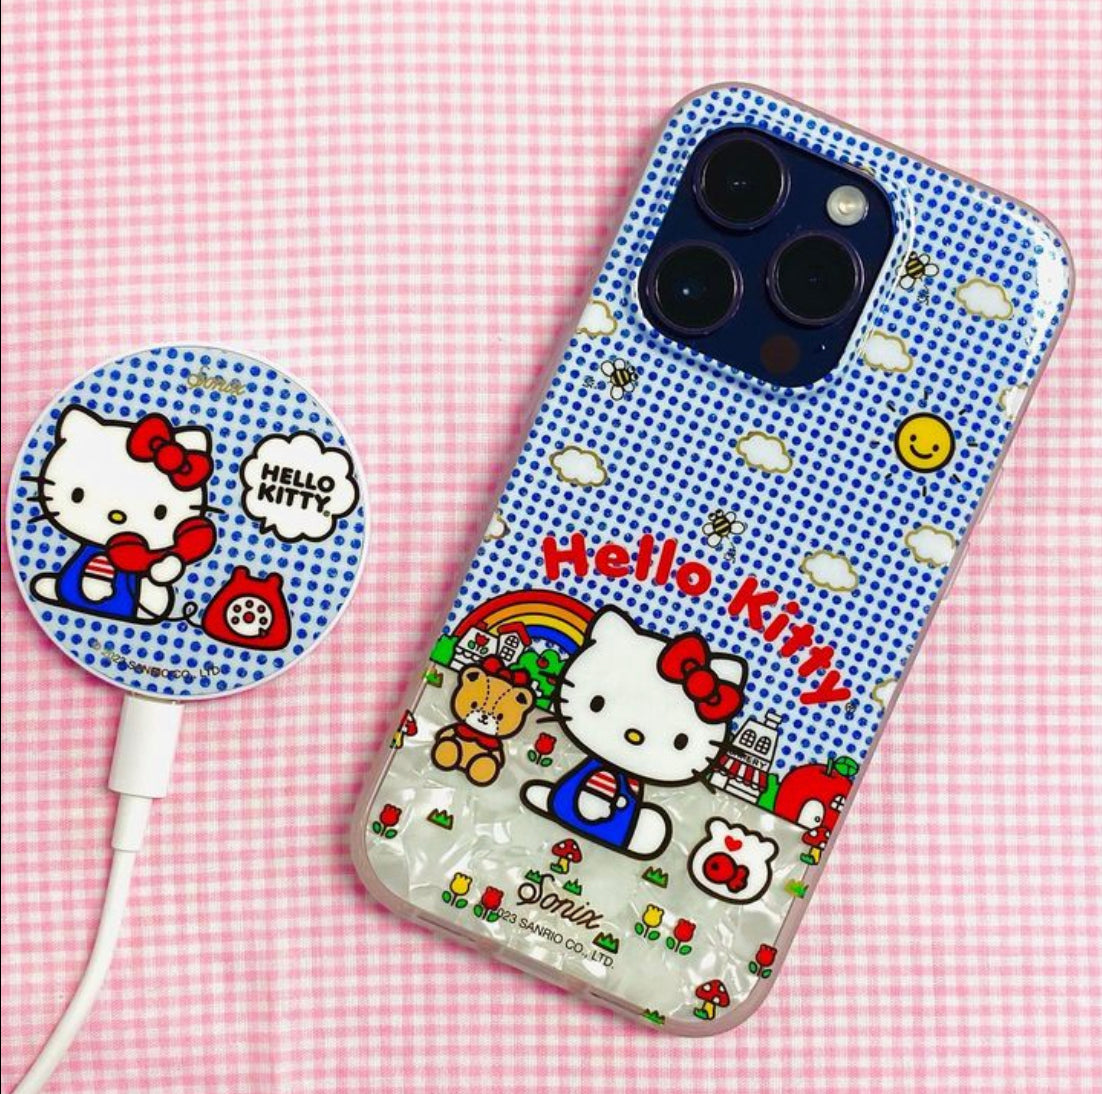 Sonix x Sanrio Case for iPhone 13 Pro